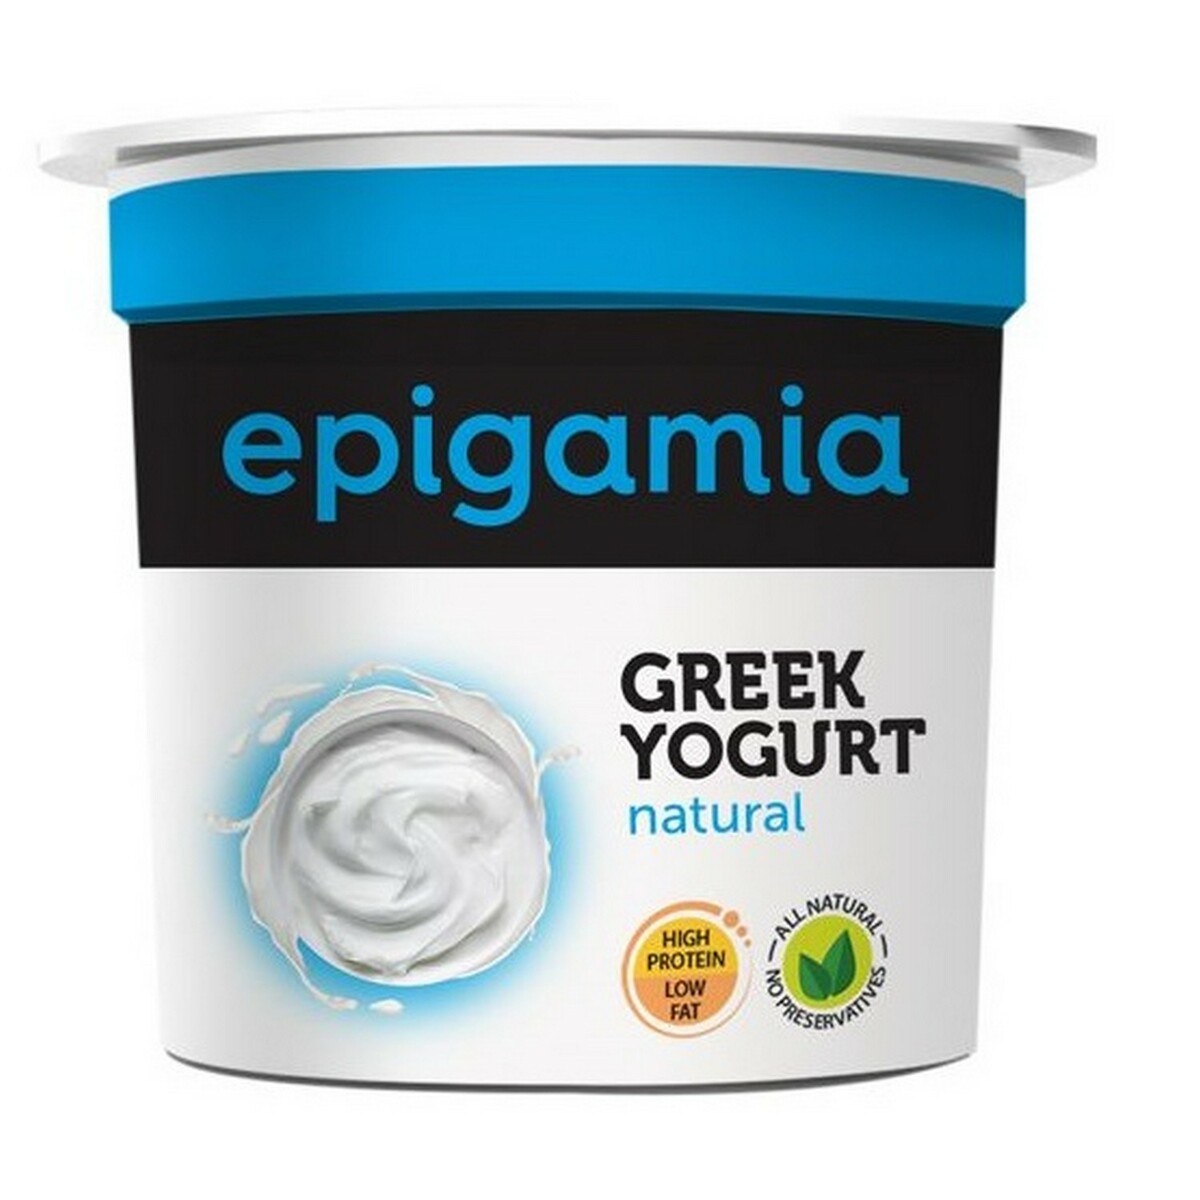 Epigamia Greek Yogurt Natural 400g